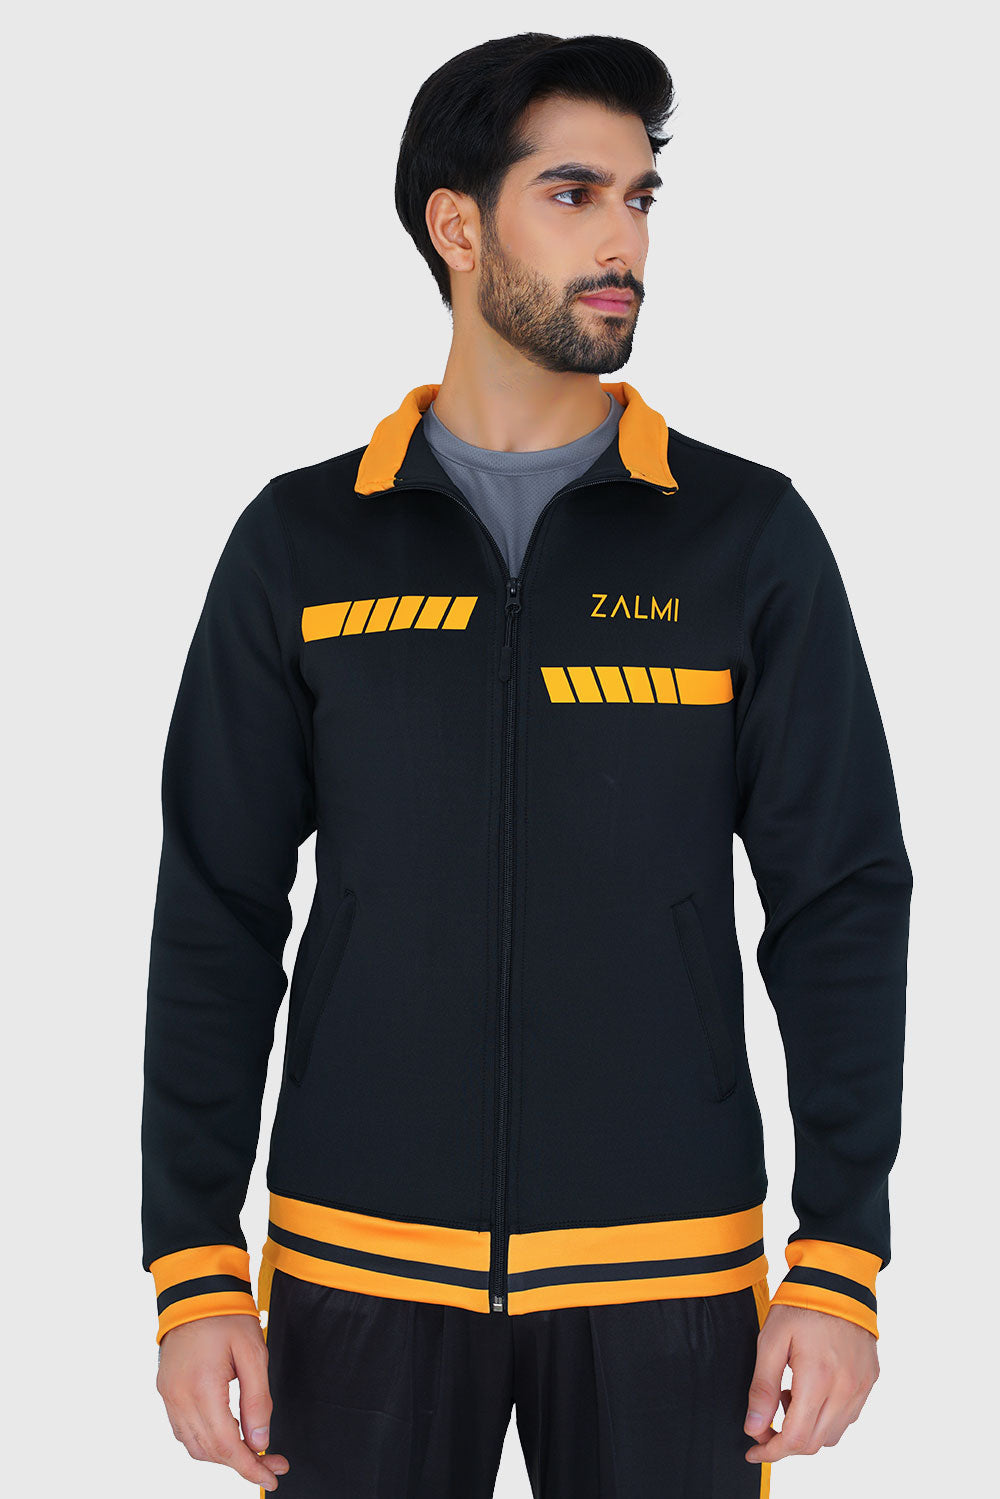 Zalmi Premium Zipper (Black)